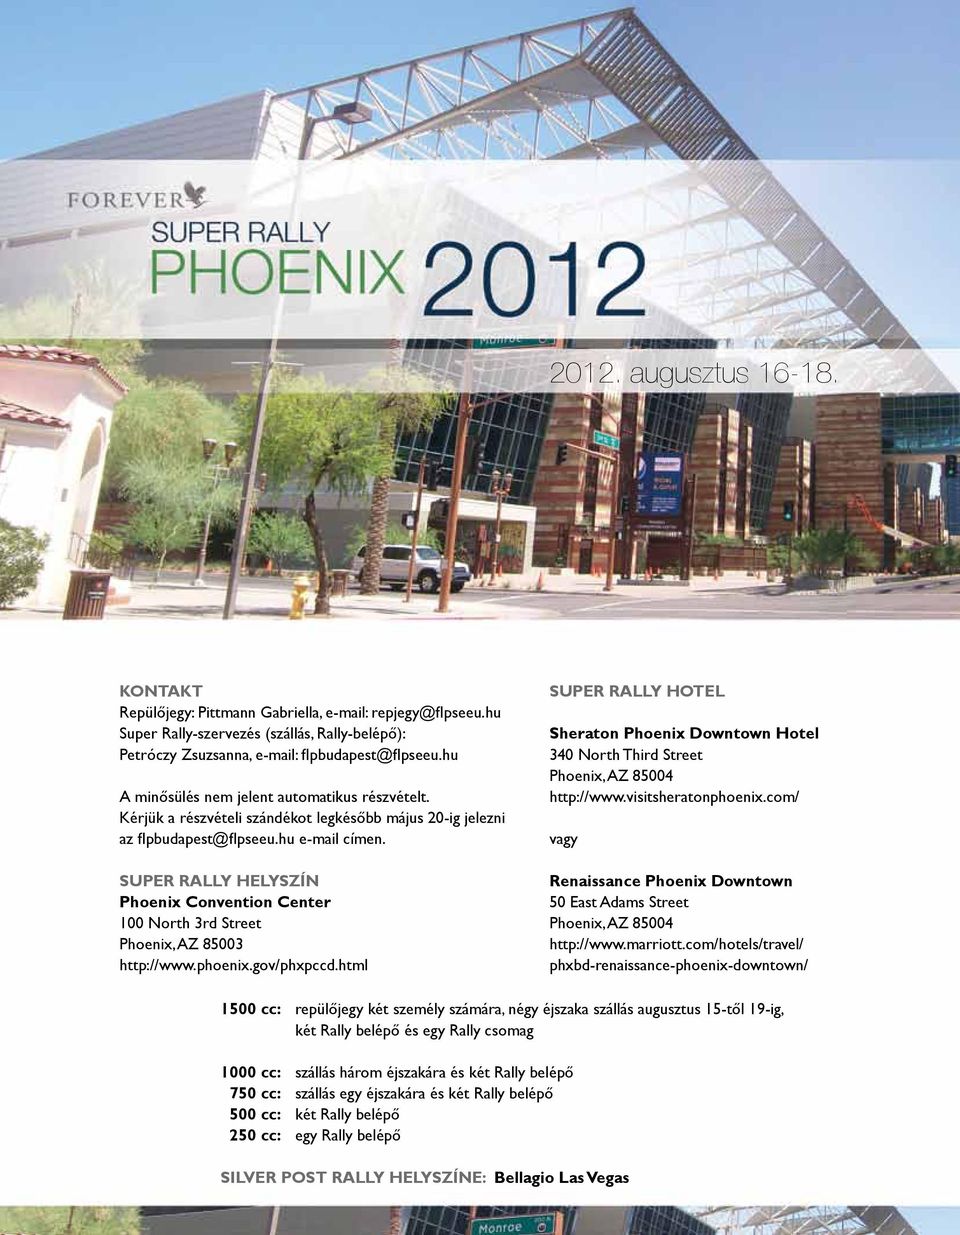 Super Rally helyszín Phoenix Convention Center 100 North 3rd Street Phoenix, AZ 85003 http://www.phoenix.gov/phxpccd.